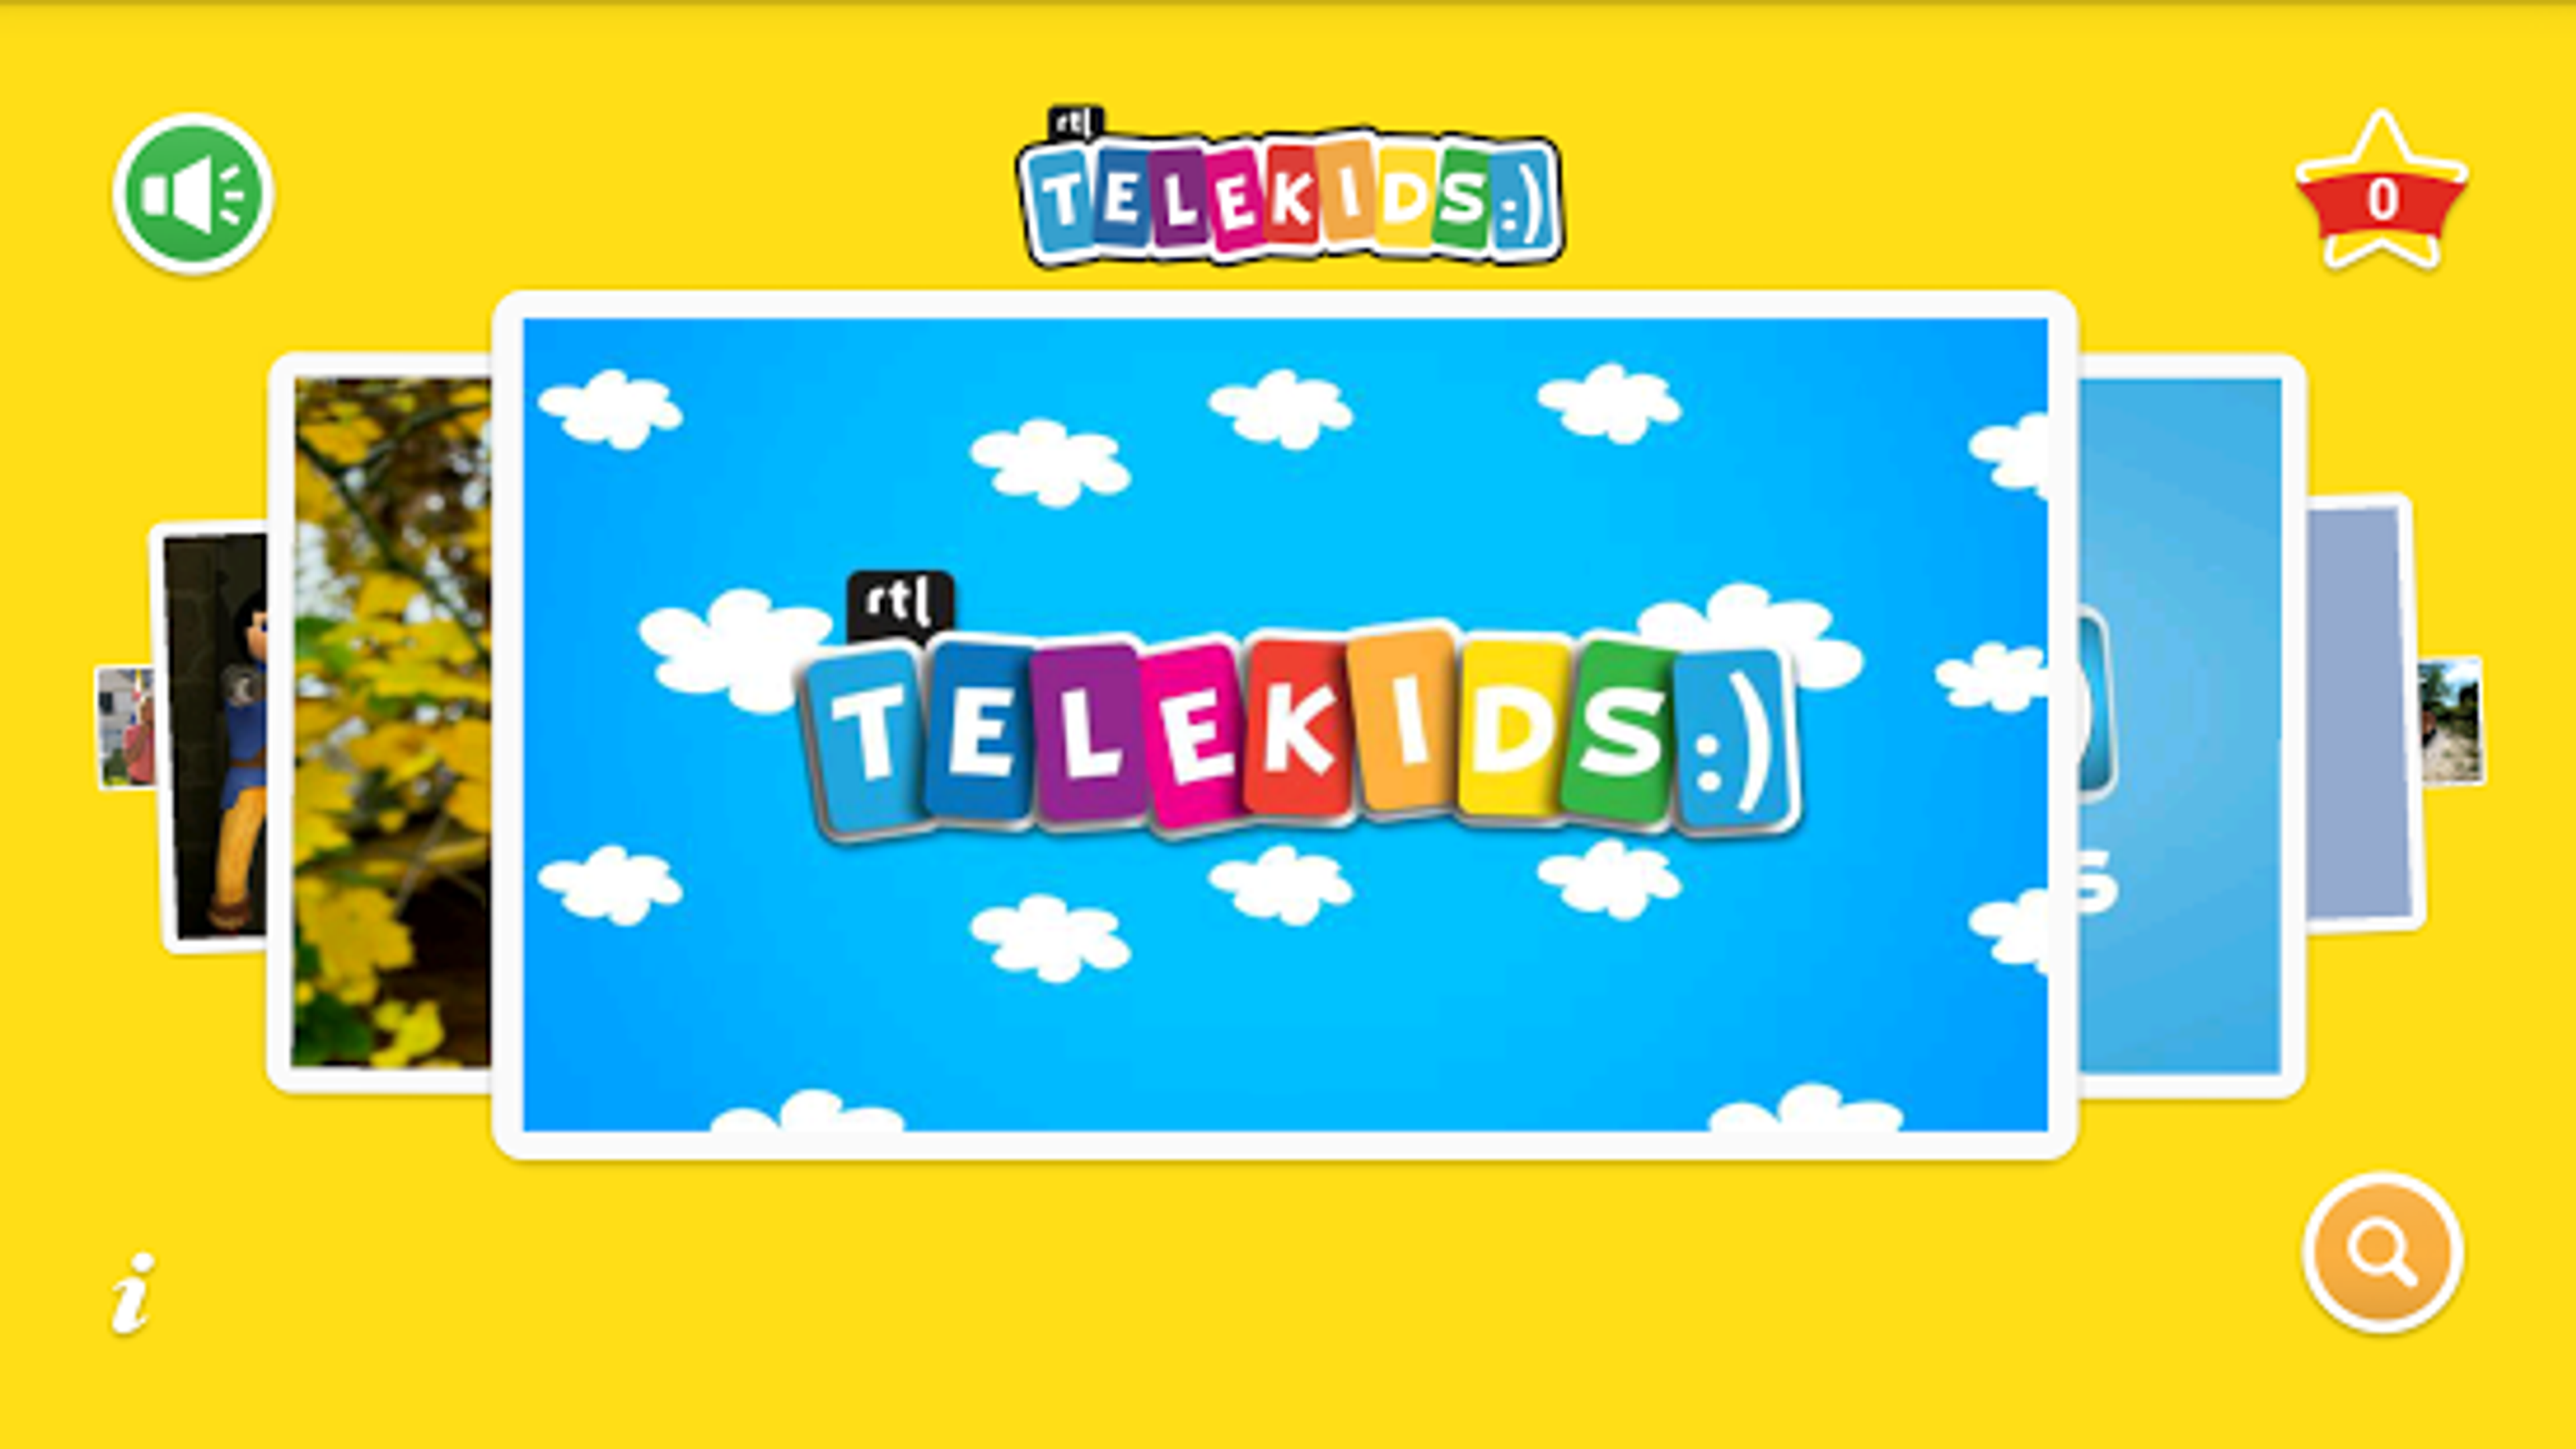 RTL Telekids-app opengesteld voor adverteerders